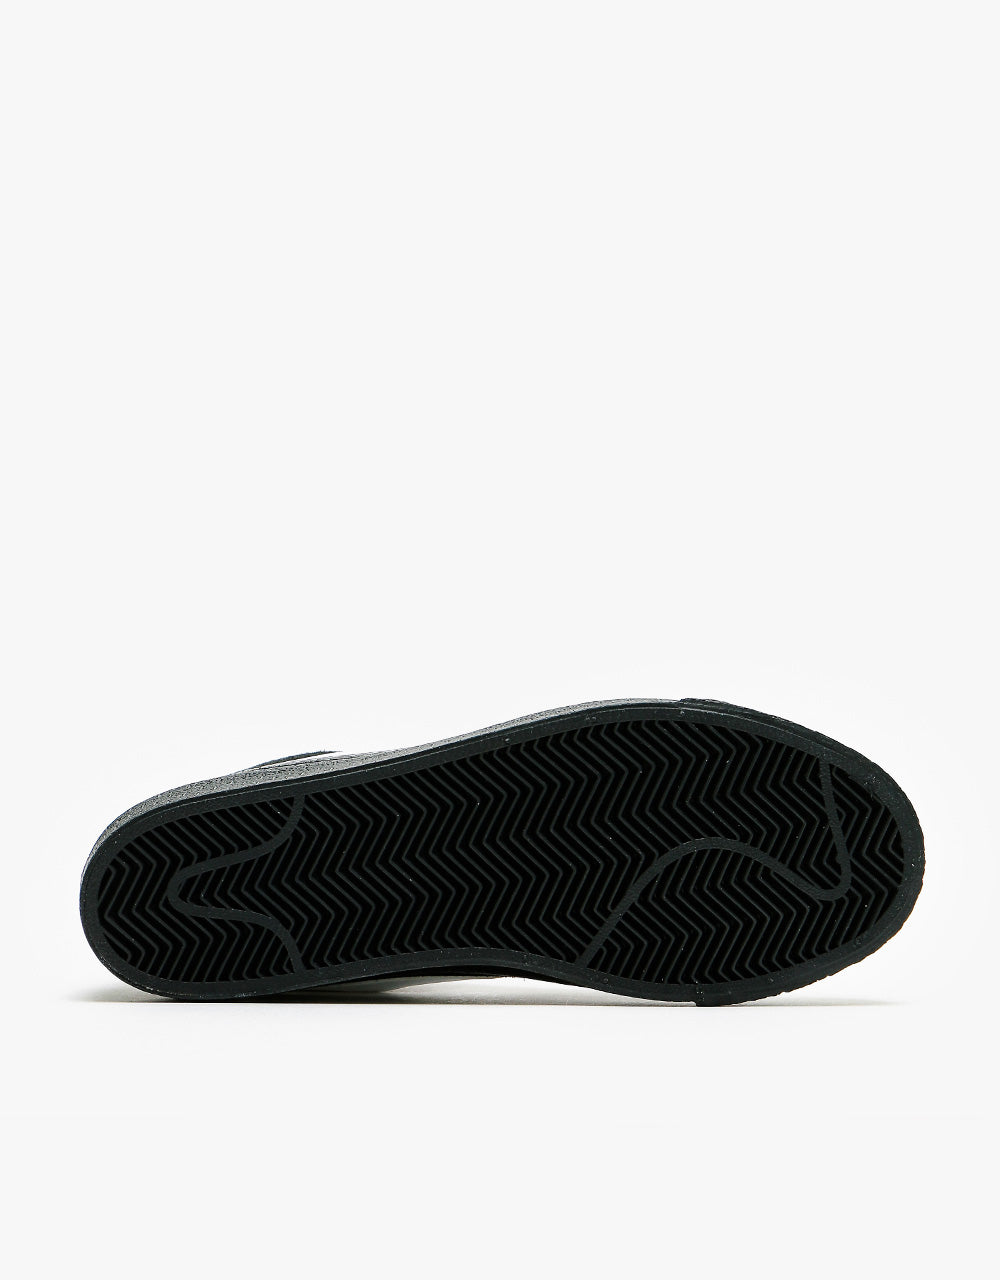 Nike SB Zoom Blazer Mid Skate Shoes - Black/White-Black-Black